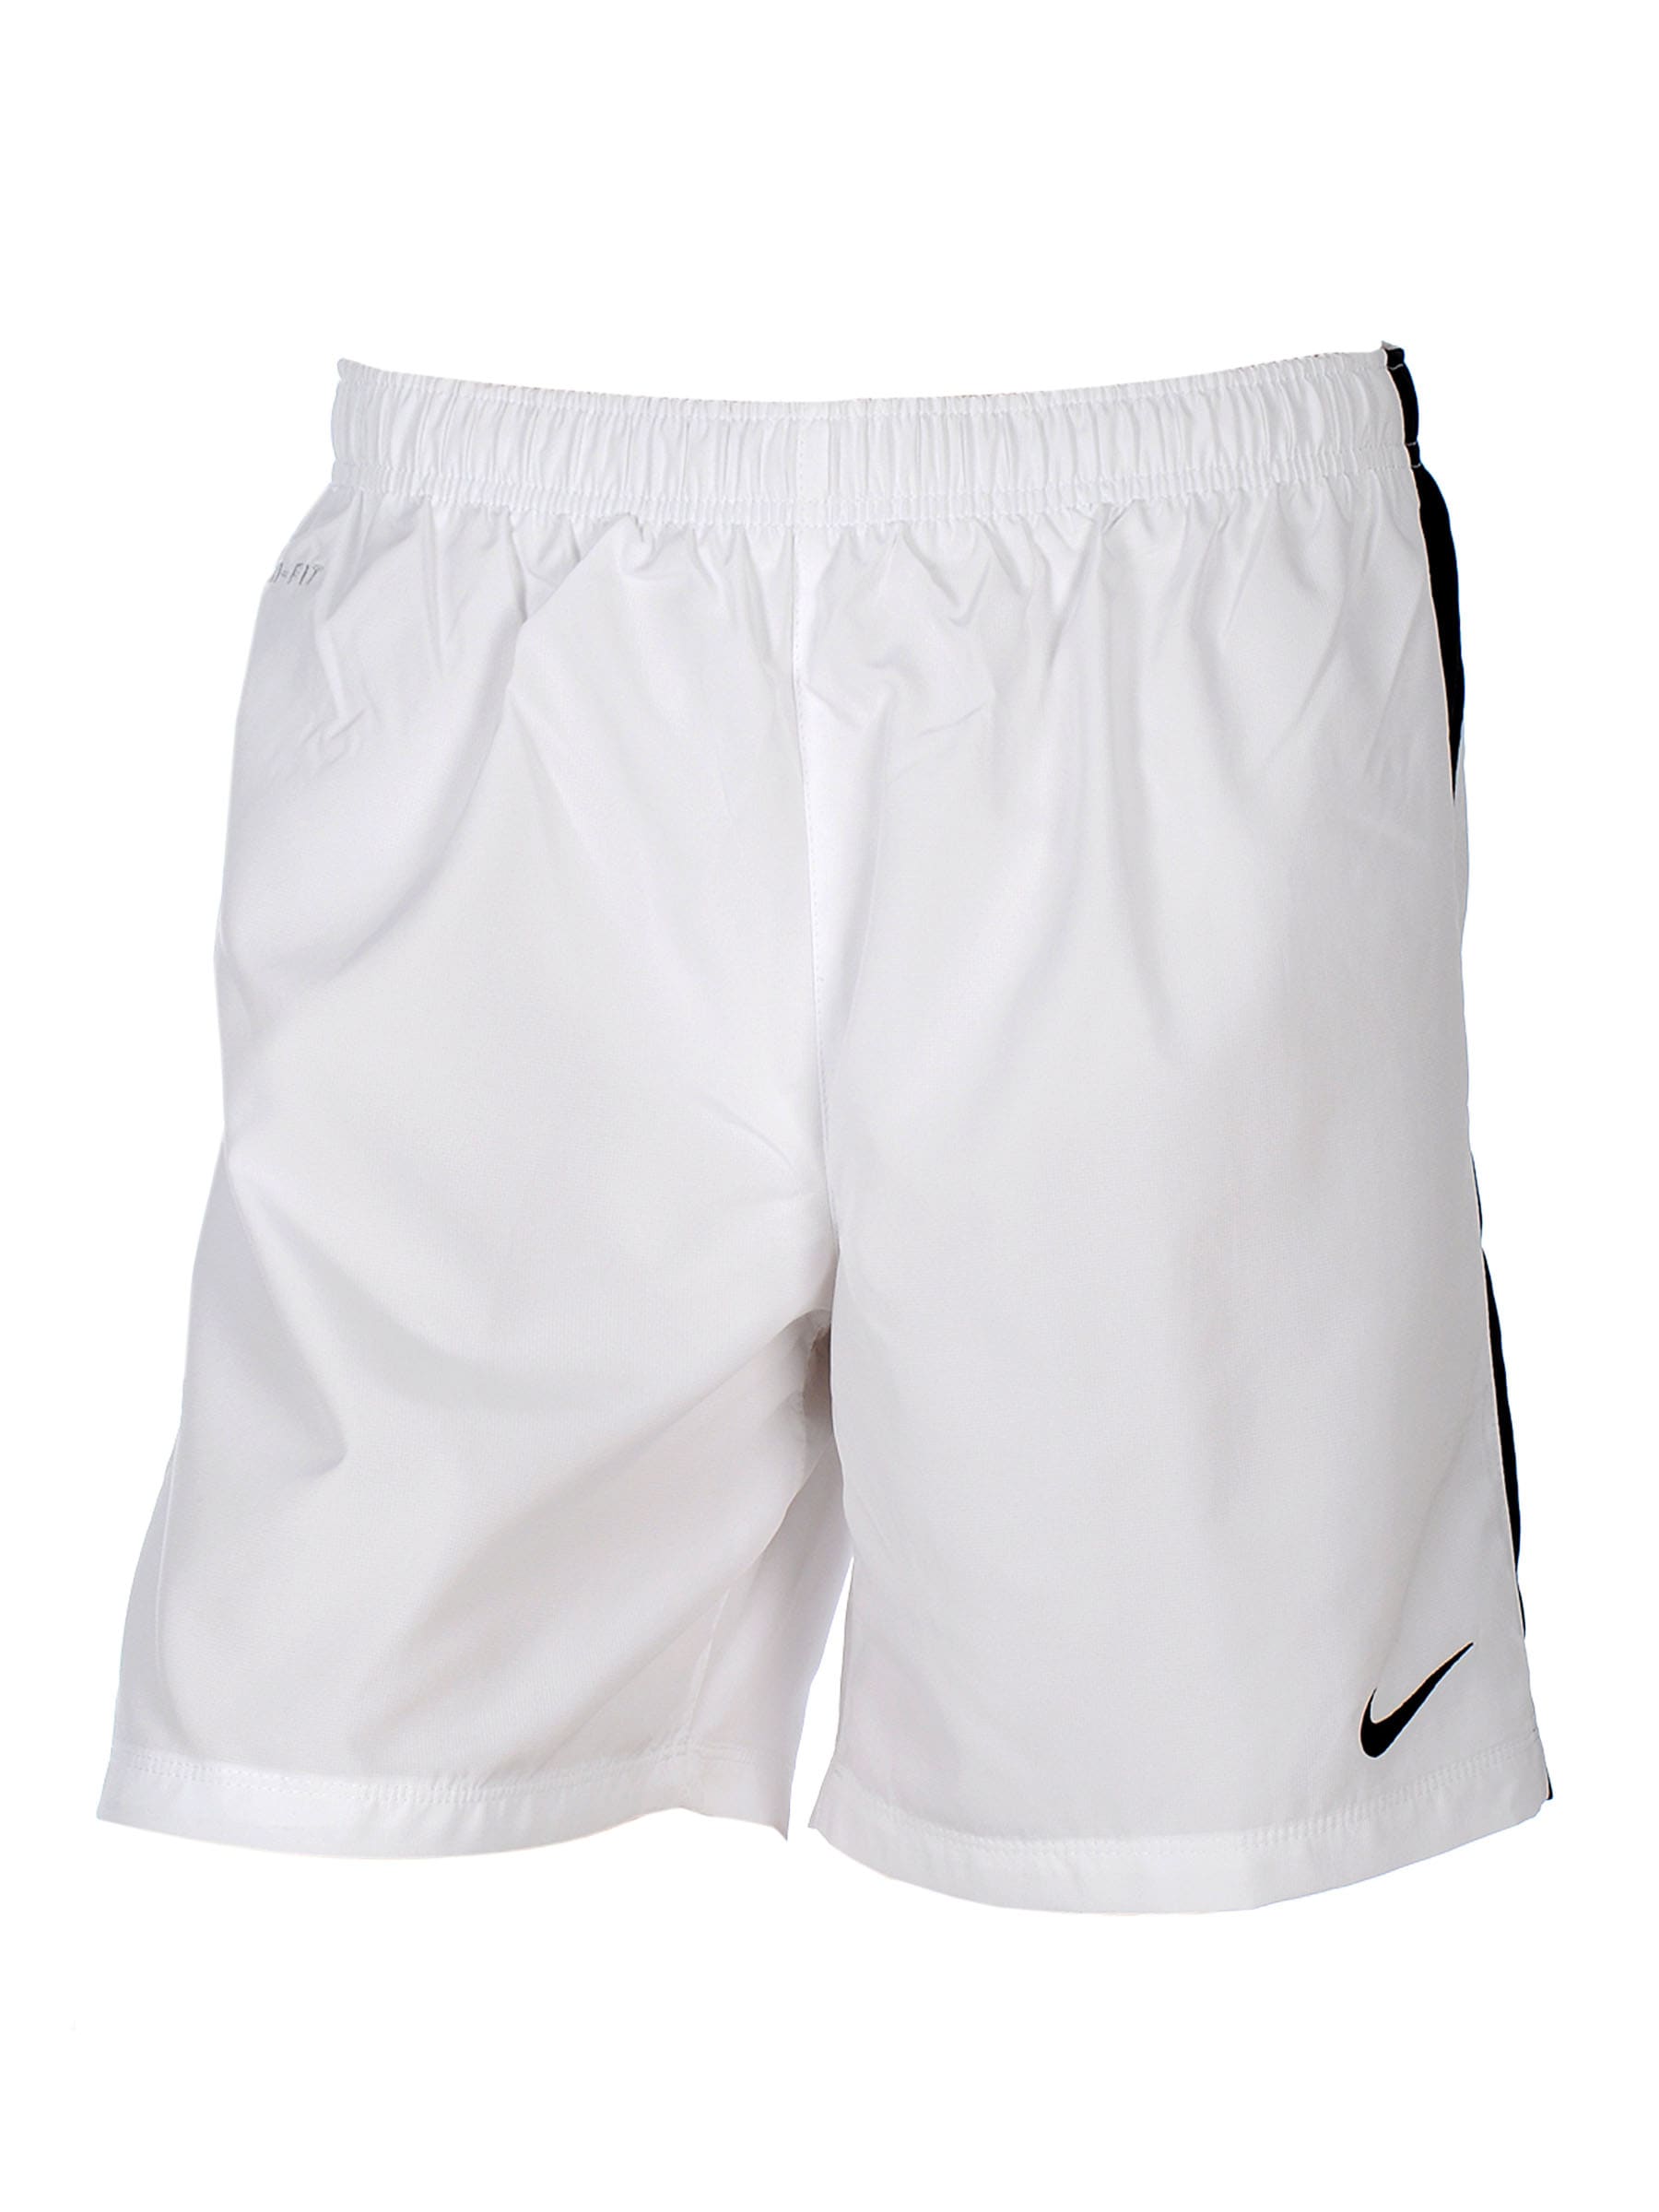 Nike Men As Woven Shor White Shorts